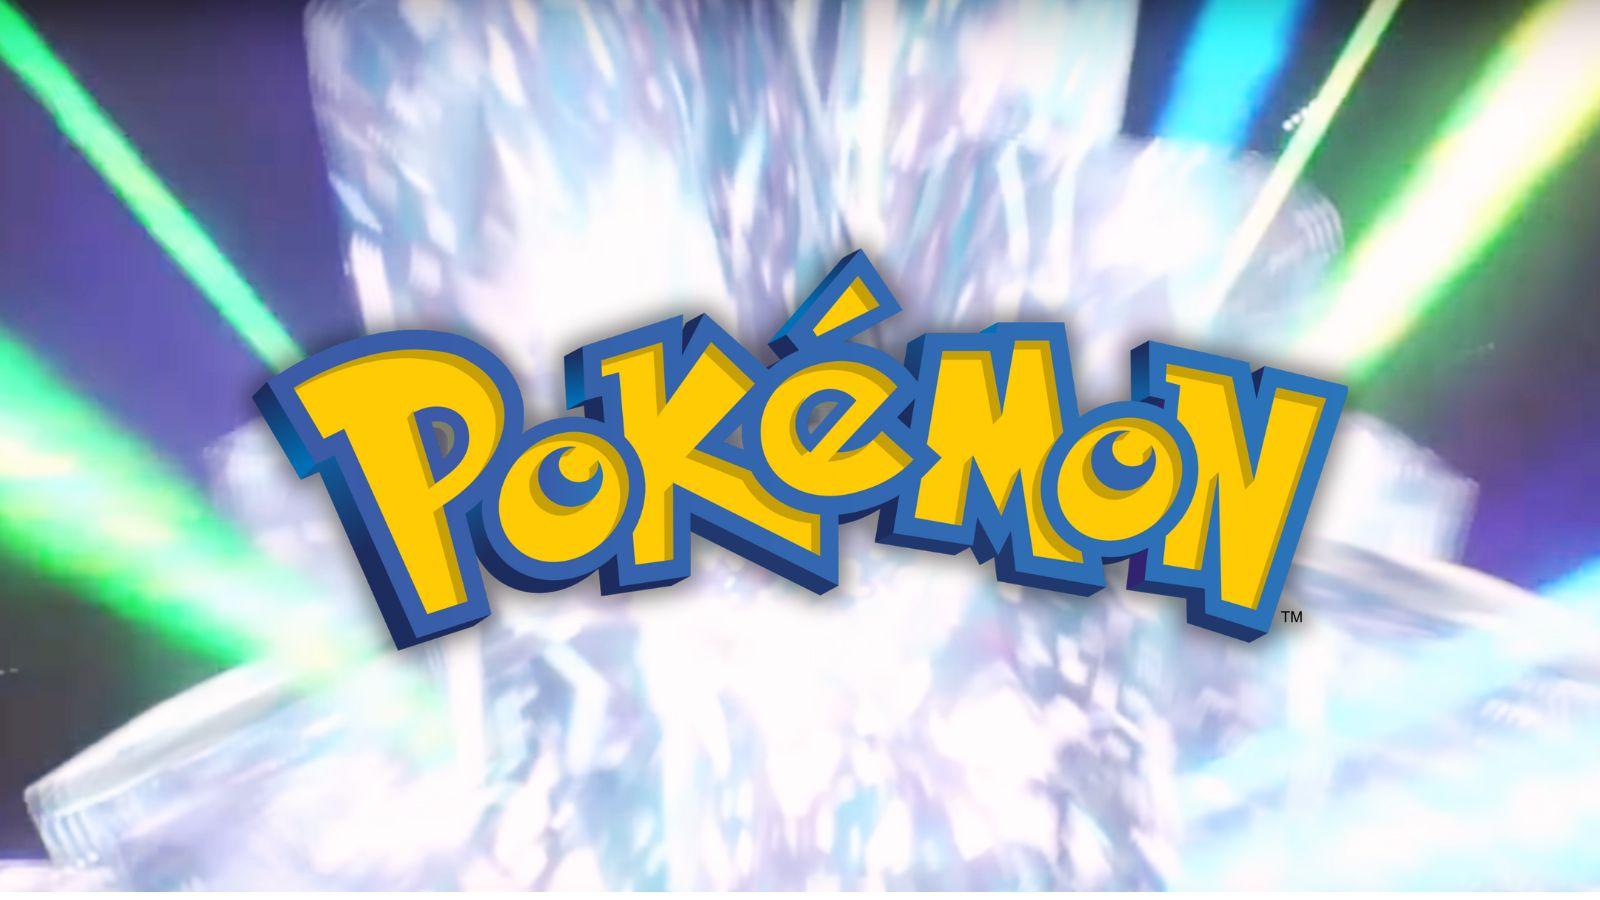 Pokemon logo with a teraform crystal behind it